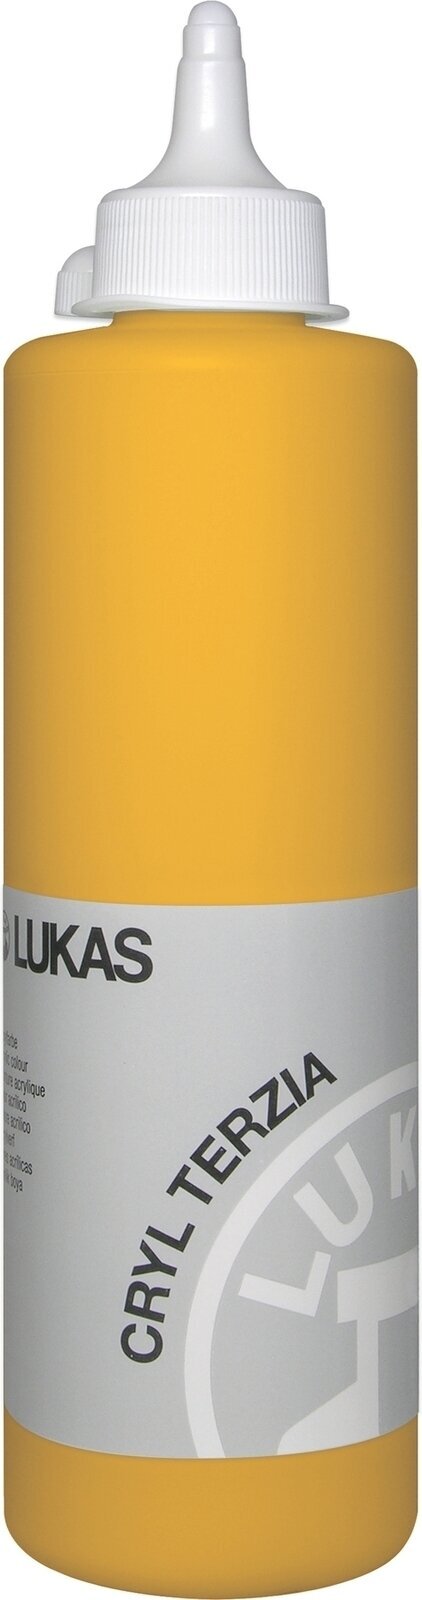 Acrylfarbe Lukas Cryl Terzia Acrylic Paint Plastic Bottle Acrylfarbe Indian Yellow 500 ml 1 Stck